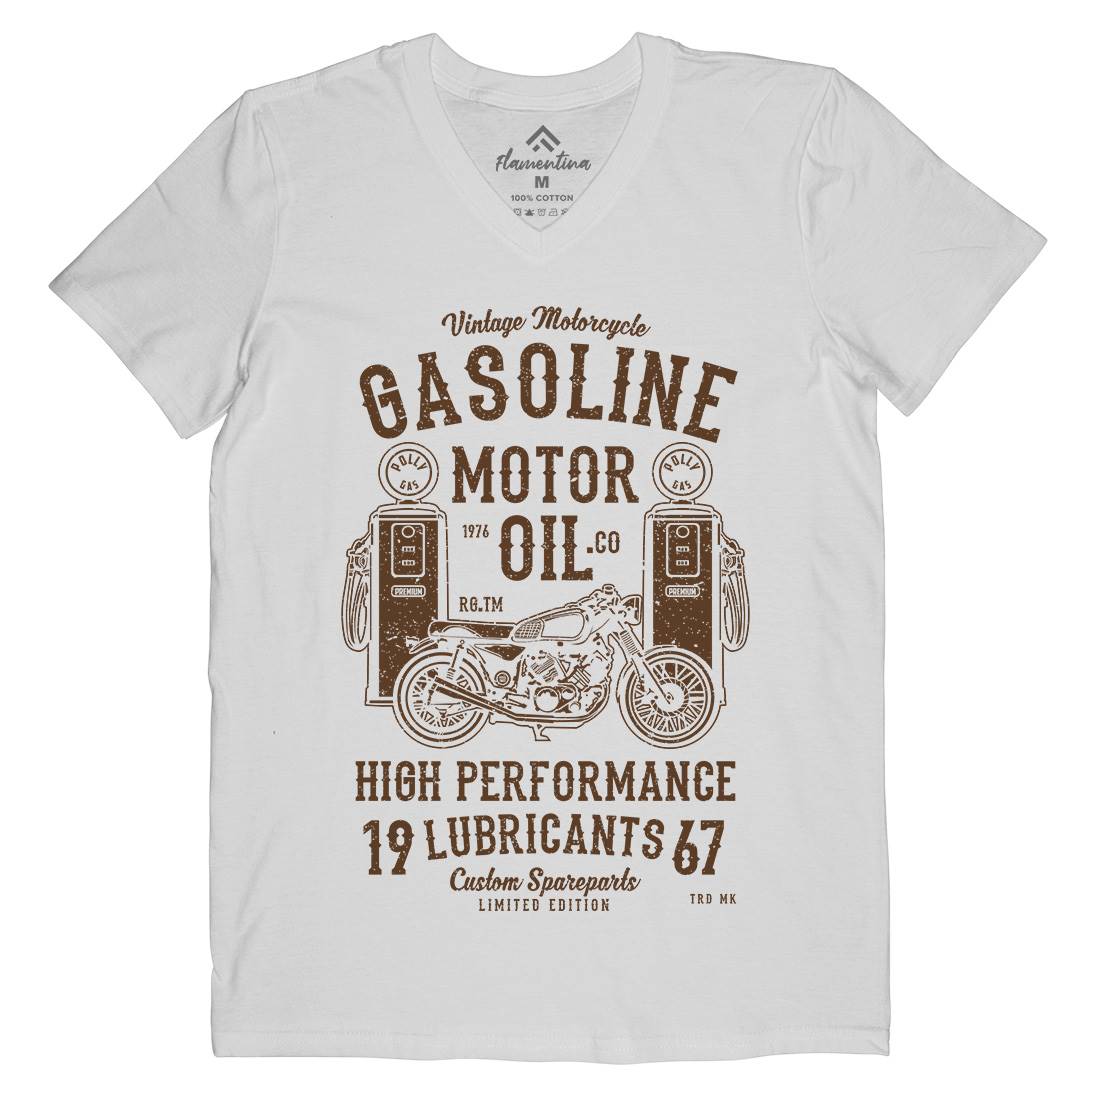 Gasoline Motor Oil Mens V-Neck T-Shirt Motorcycles A669